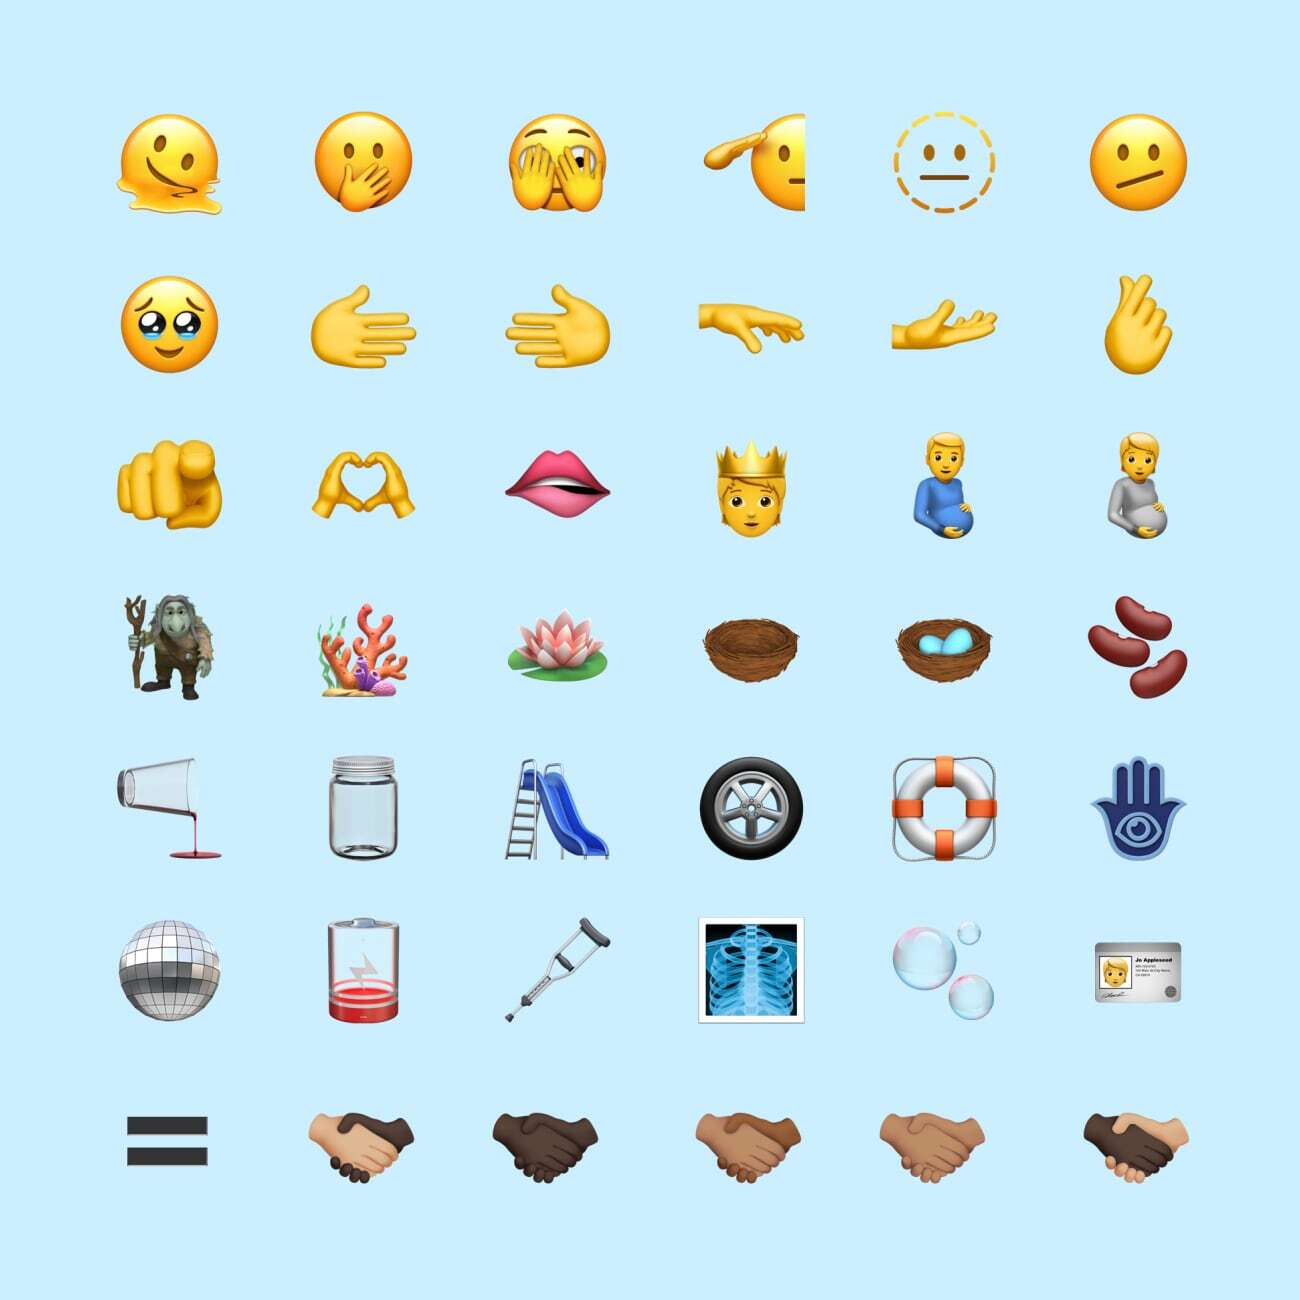 https://blog.emojipedia.org/content/images/2022/01/new-emojis-ios-15-4-emojiepdia.jpg